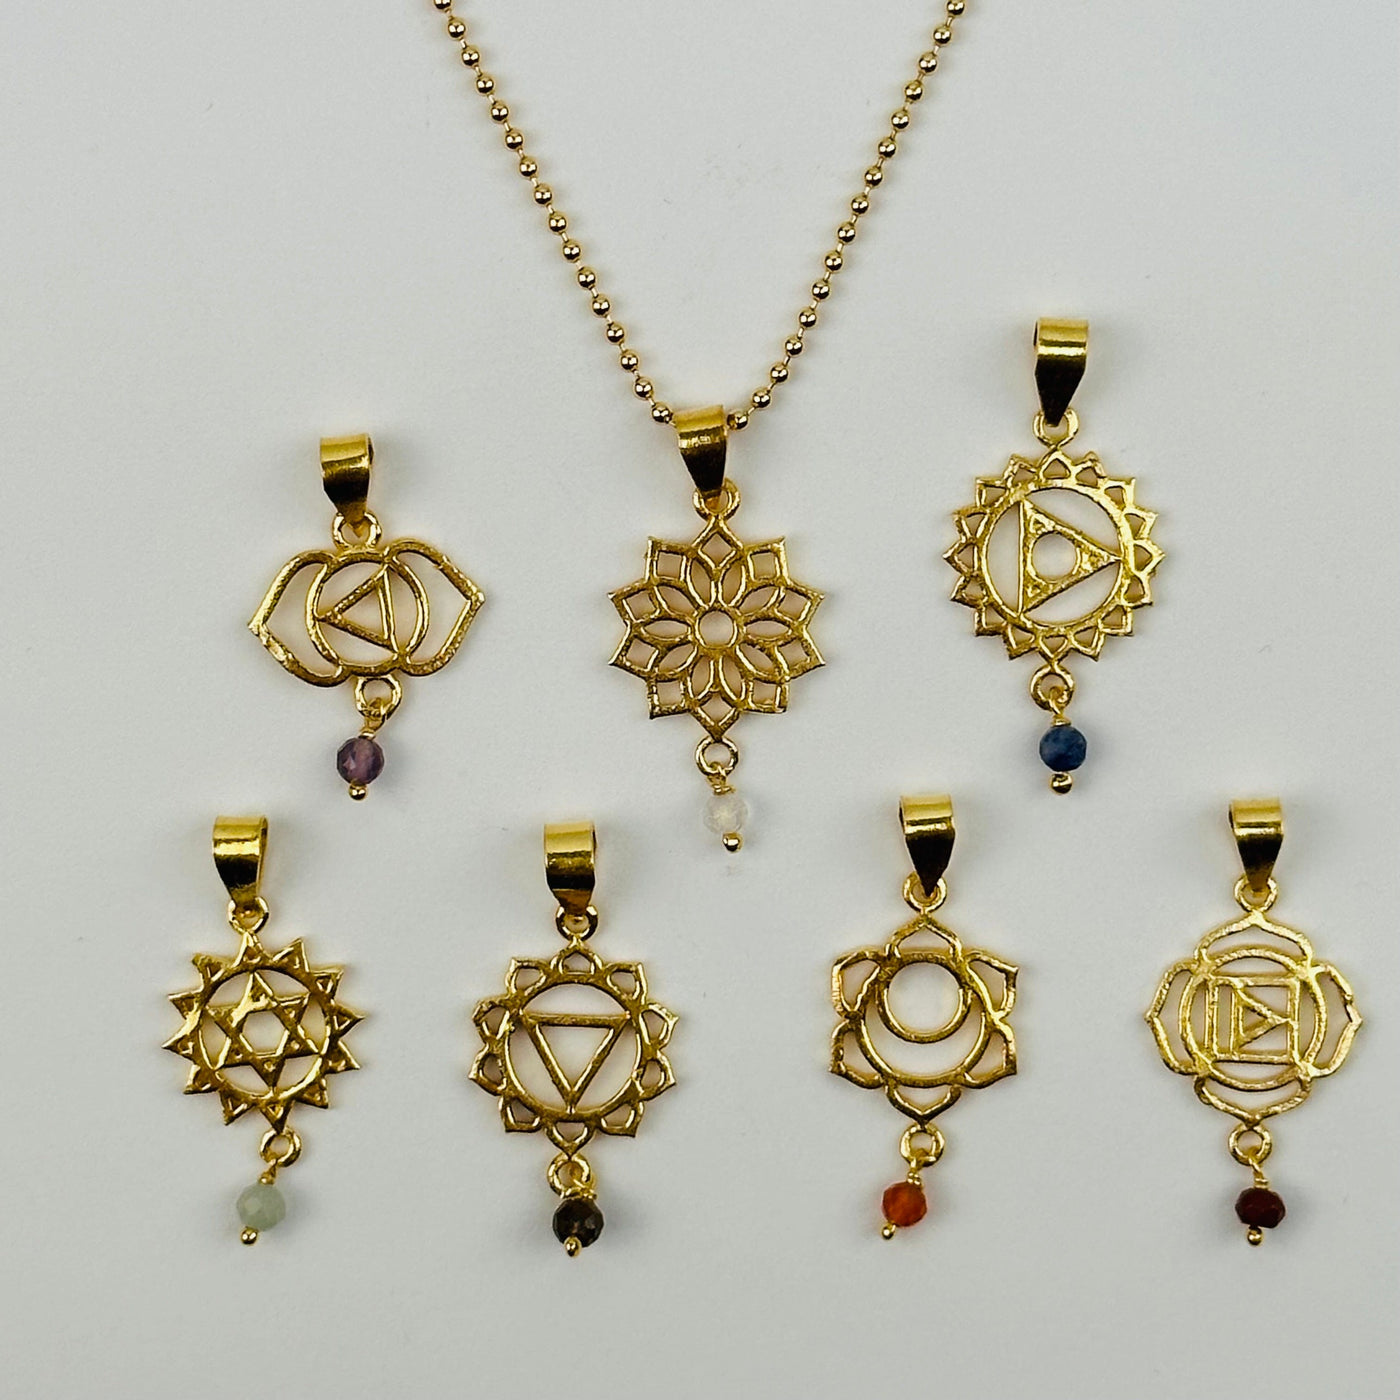 each chakra has a gemstone bead on it